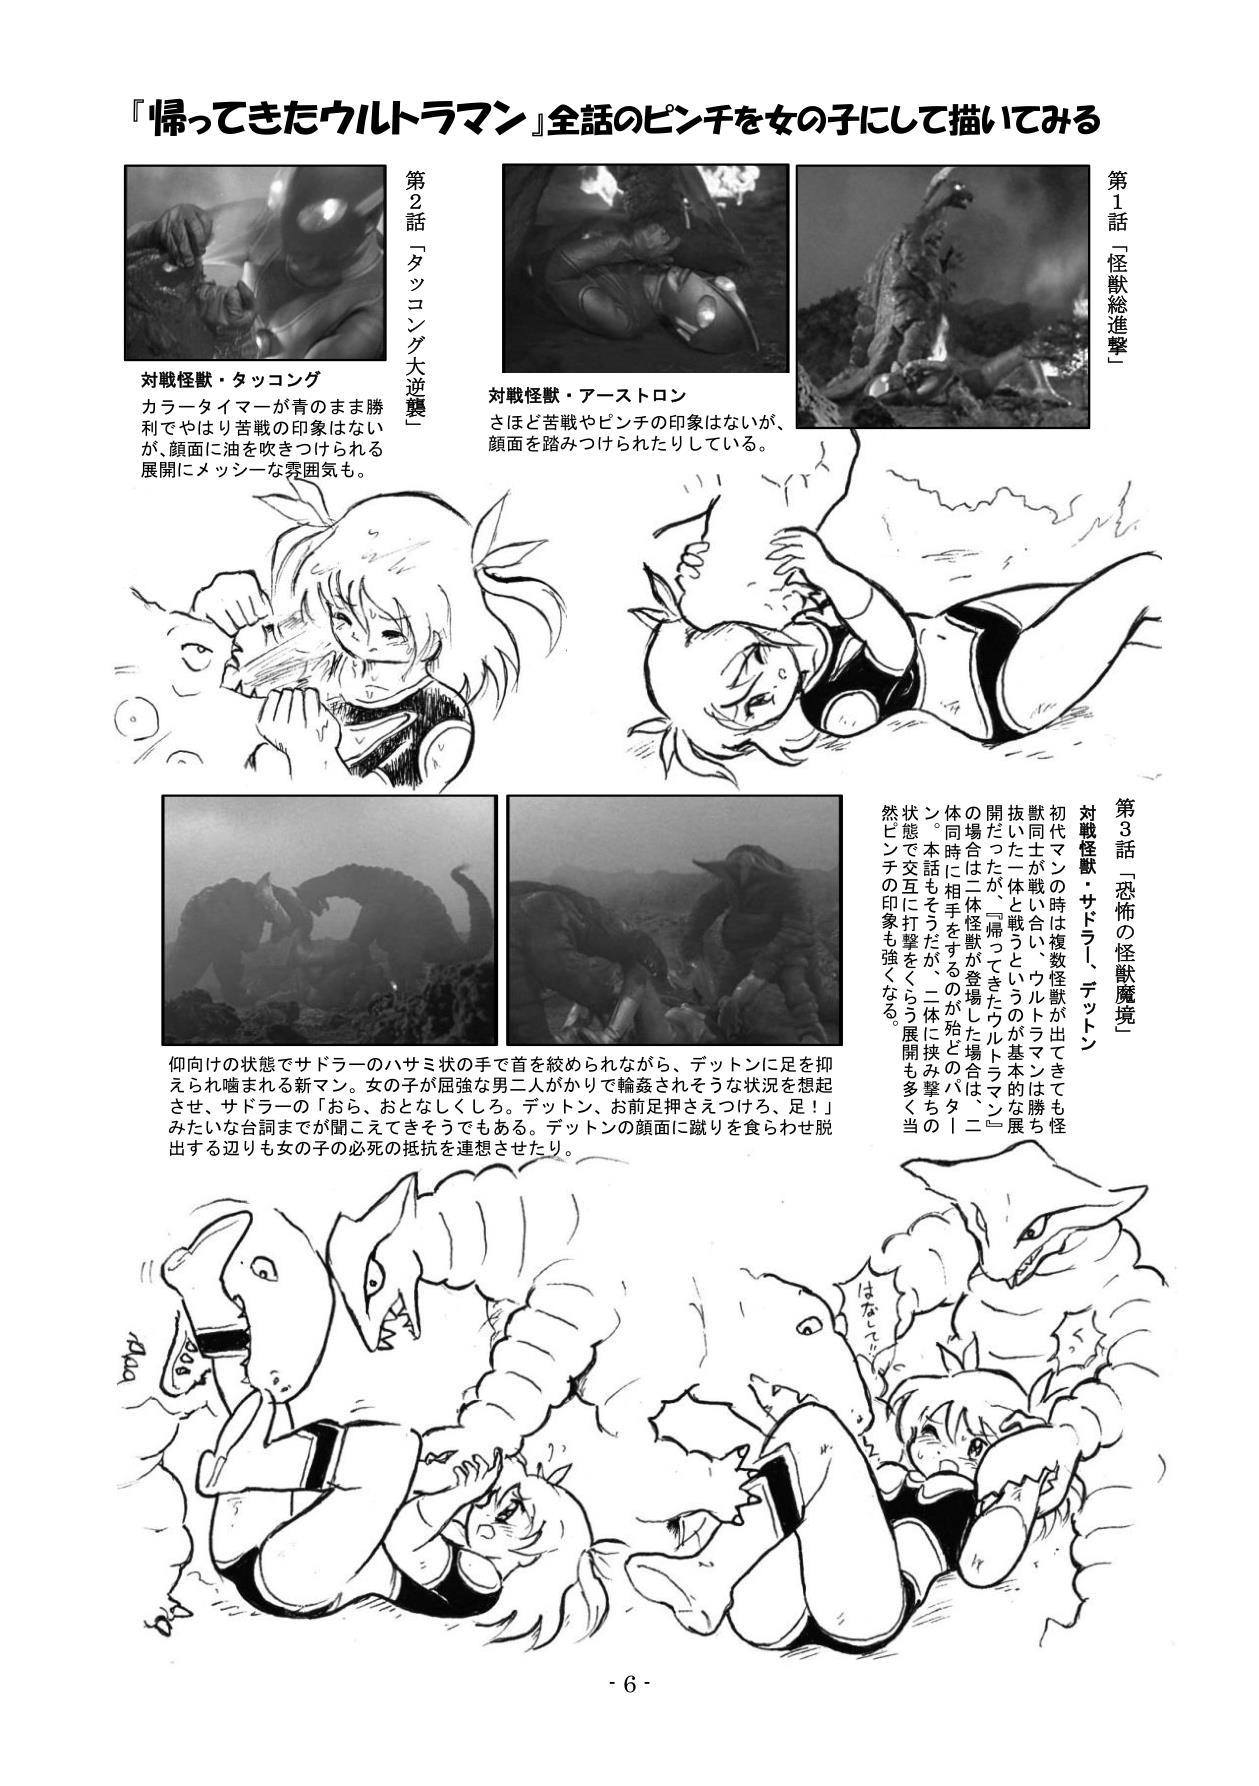 Seduction Kaettekita Ultraman Musume Dai Pinch - Ultraman Kiss - Page 5